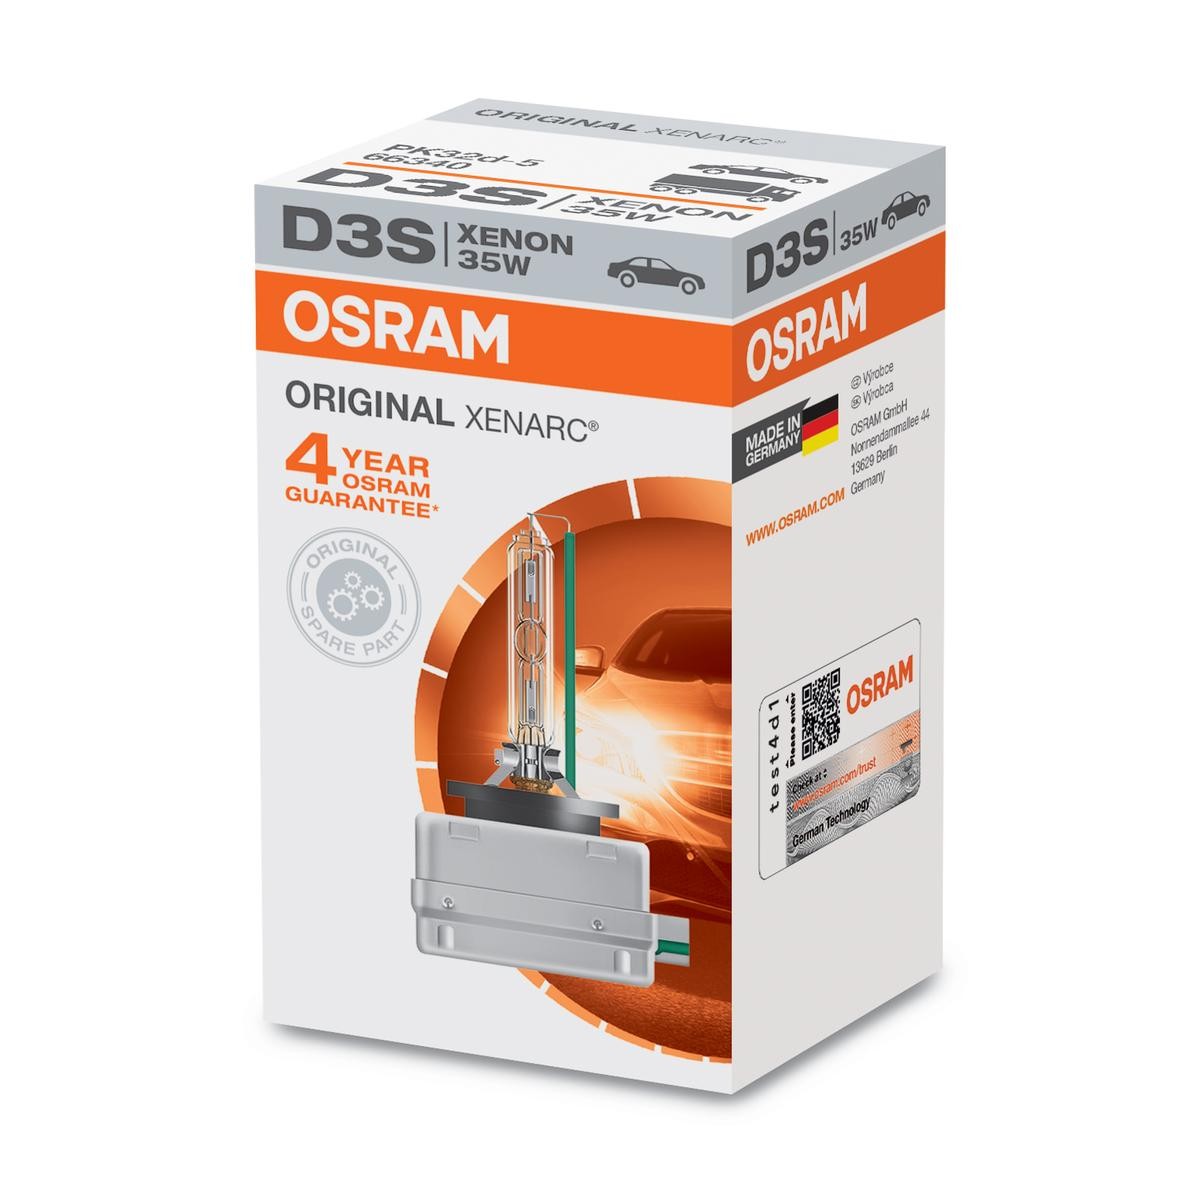 OSRAM XENARC ORIGINAL 66340 Λυχνία προβολέα πορείας D3S (λυχνία εκκένωσης αερίου) 42V 35W4100K Ξένον